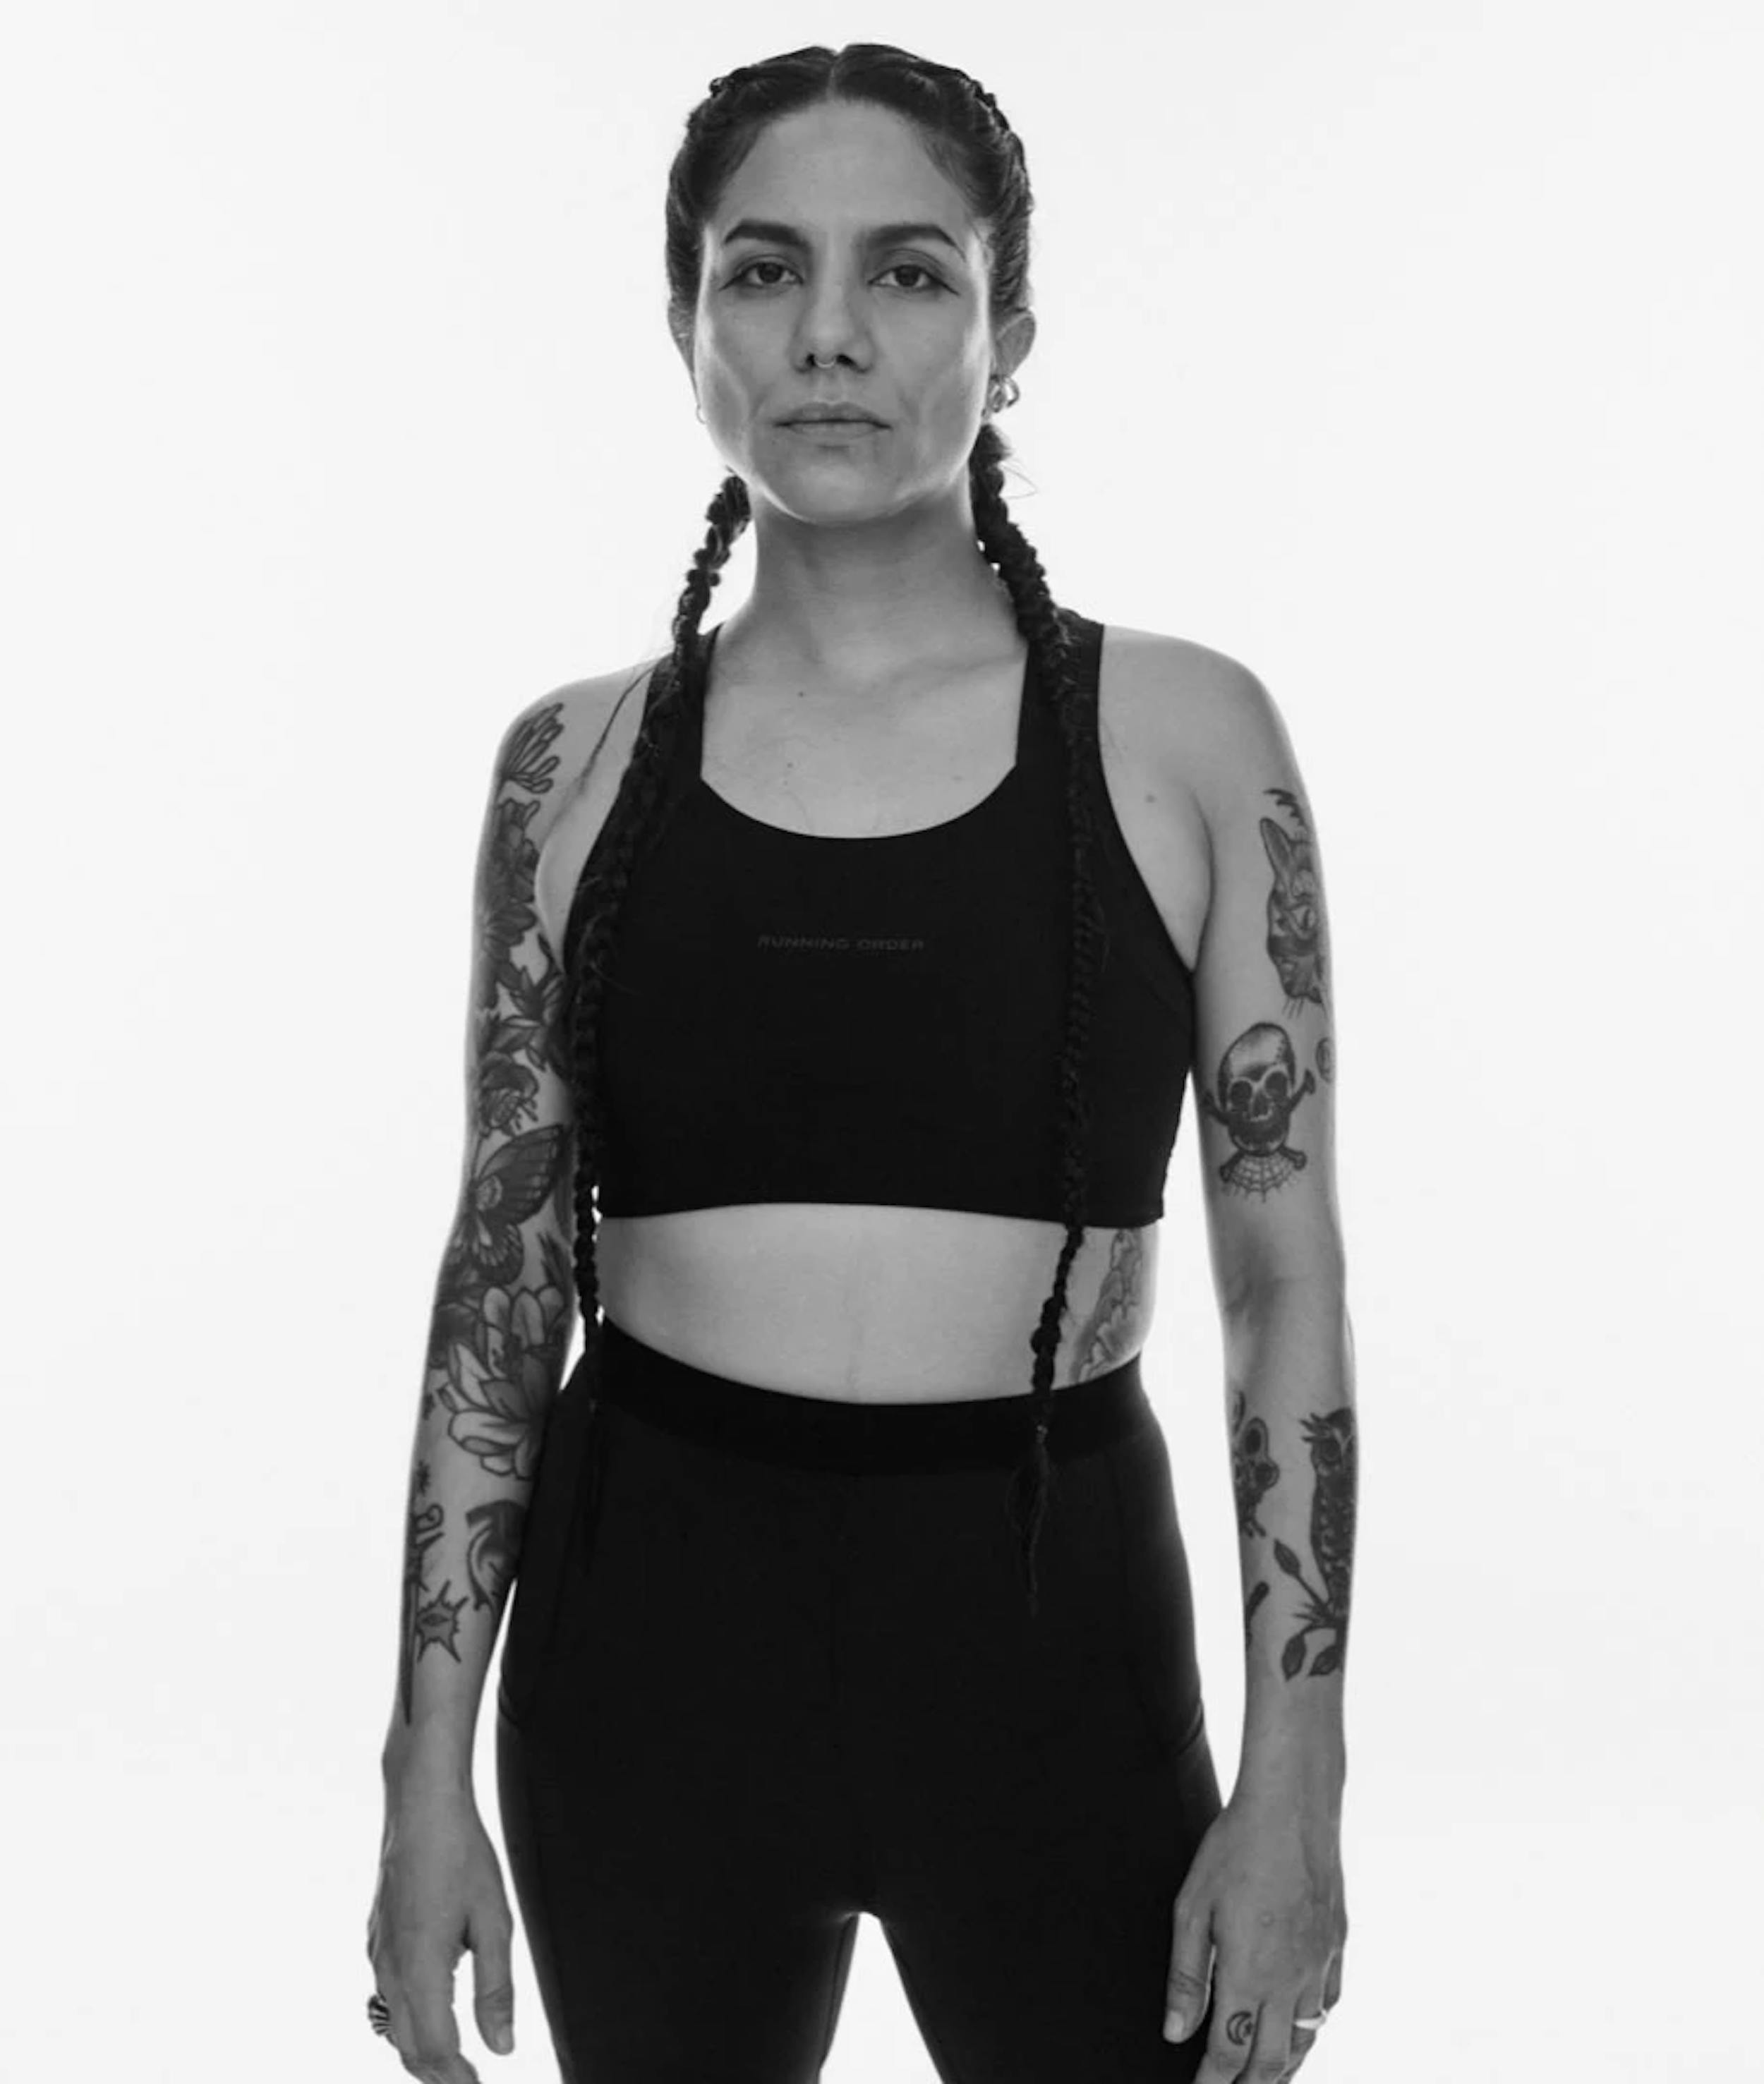 SÃO PAULO-BASED DJ & Producer Amanda Mussi interviewed by Running Order while wearing the Sadef Sports Bra & Ari 6” Shorts